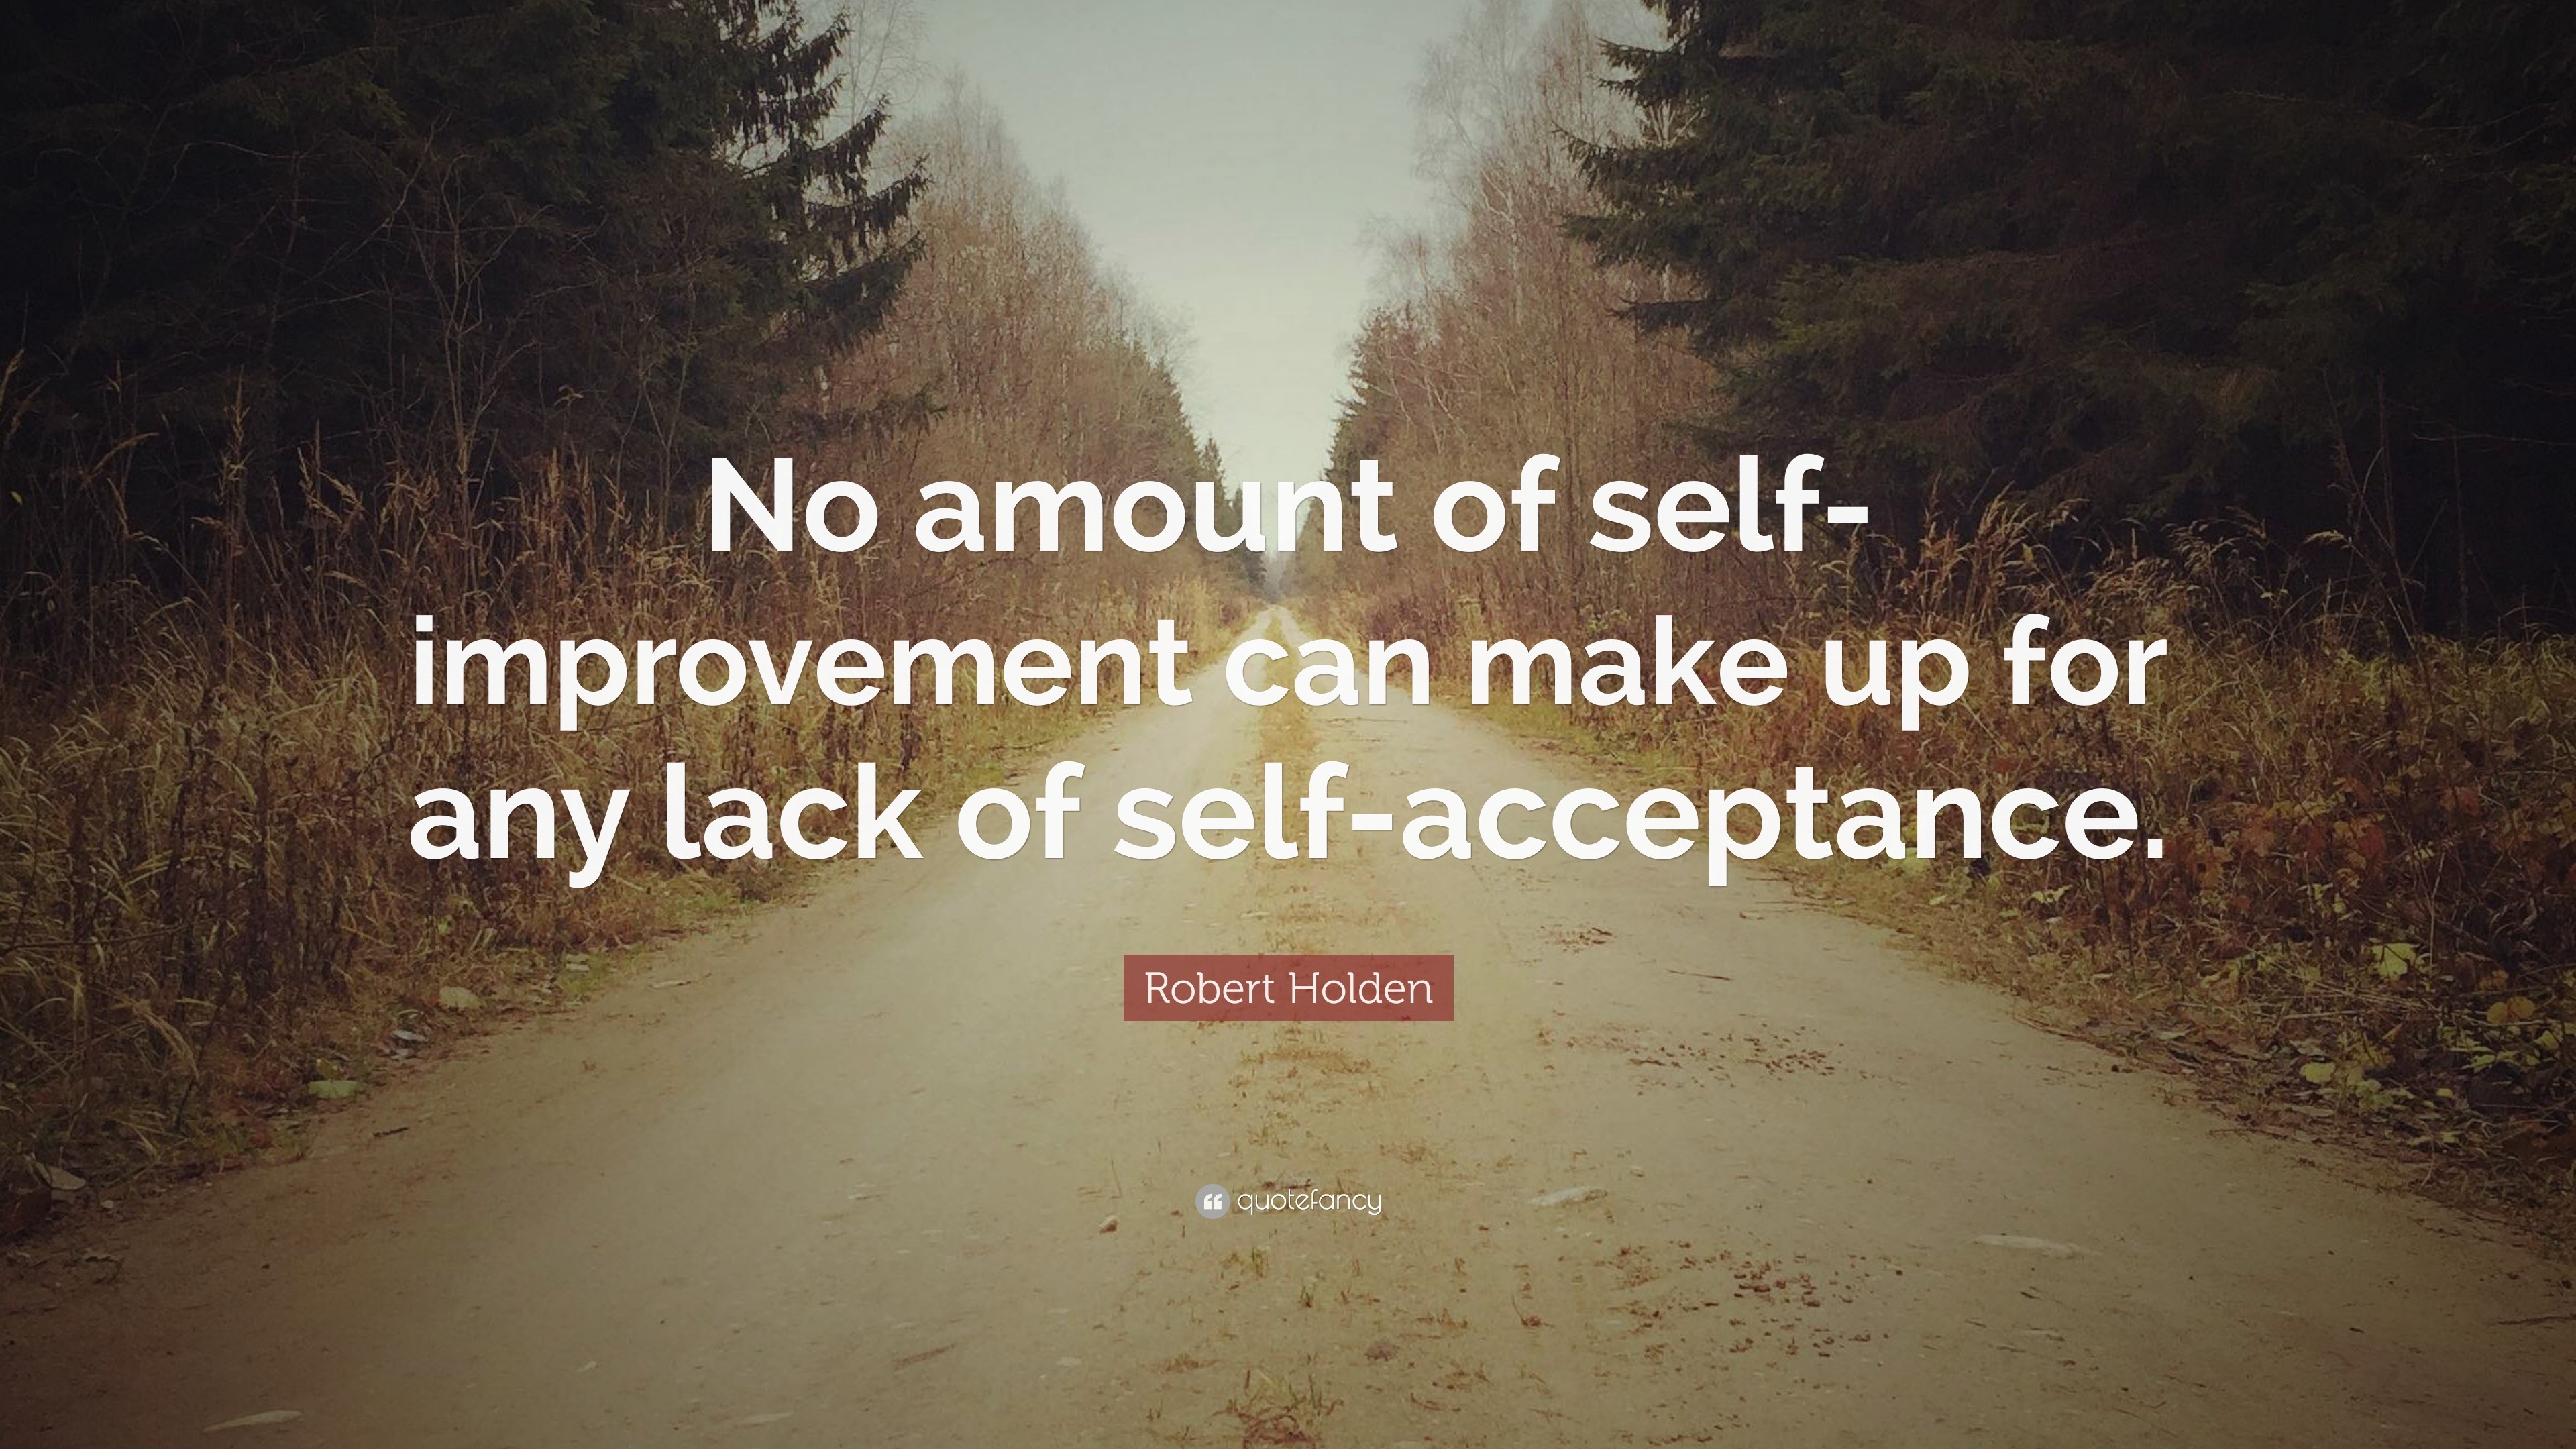 Robert Holden Quote “No amount of selfimprovement can